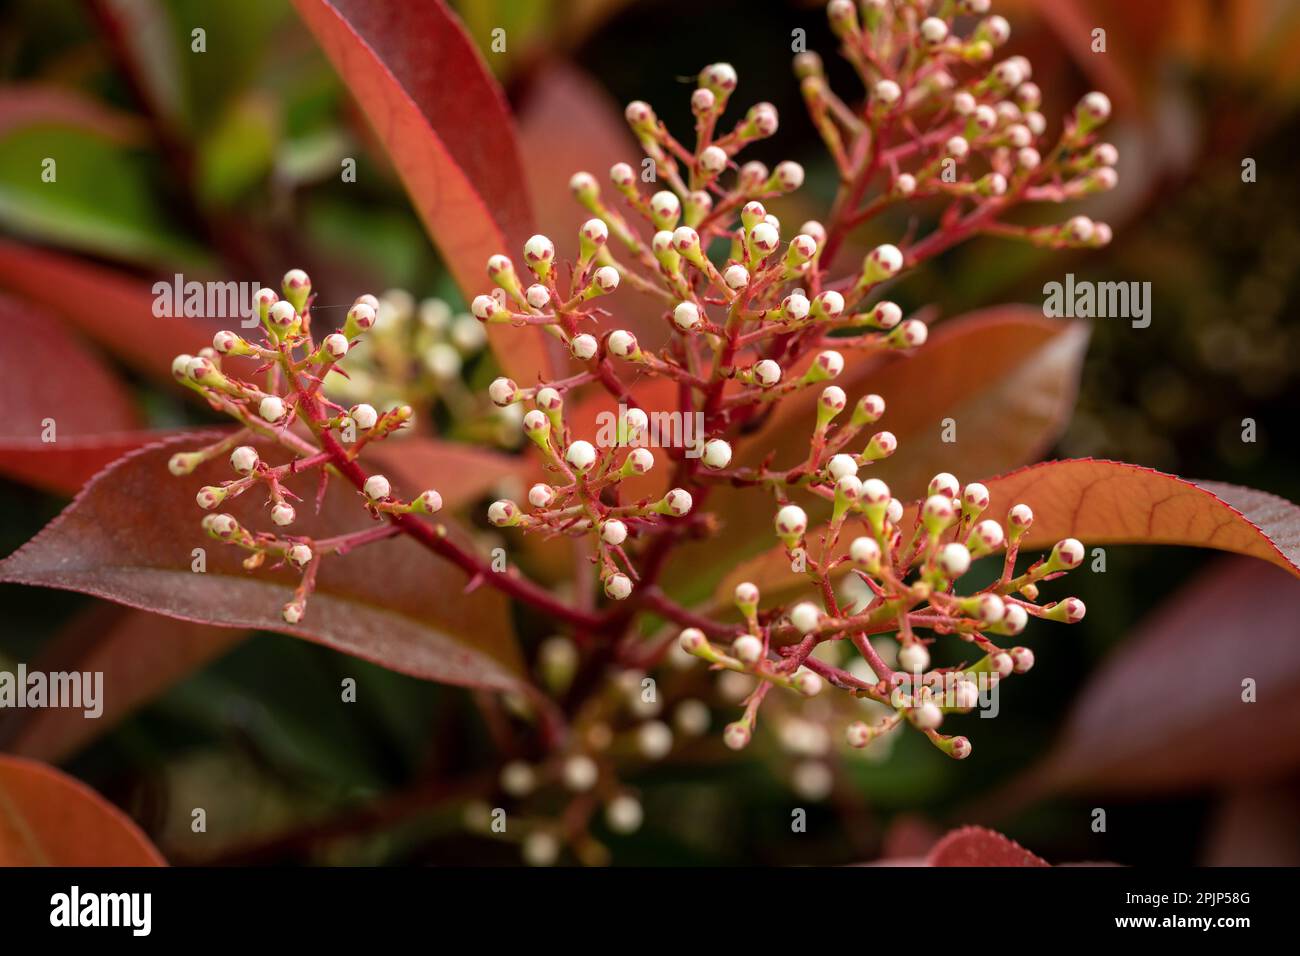 Photinia Red Robin flower buds - Latin name - Photinia Red Robin. Blooming beautiful photinia flower. Stock Photo